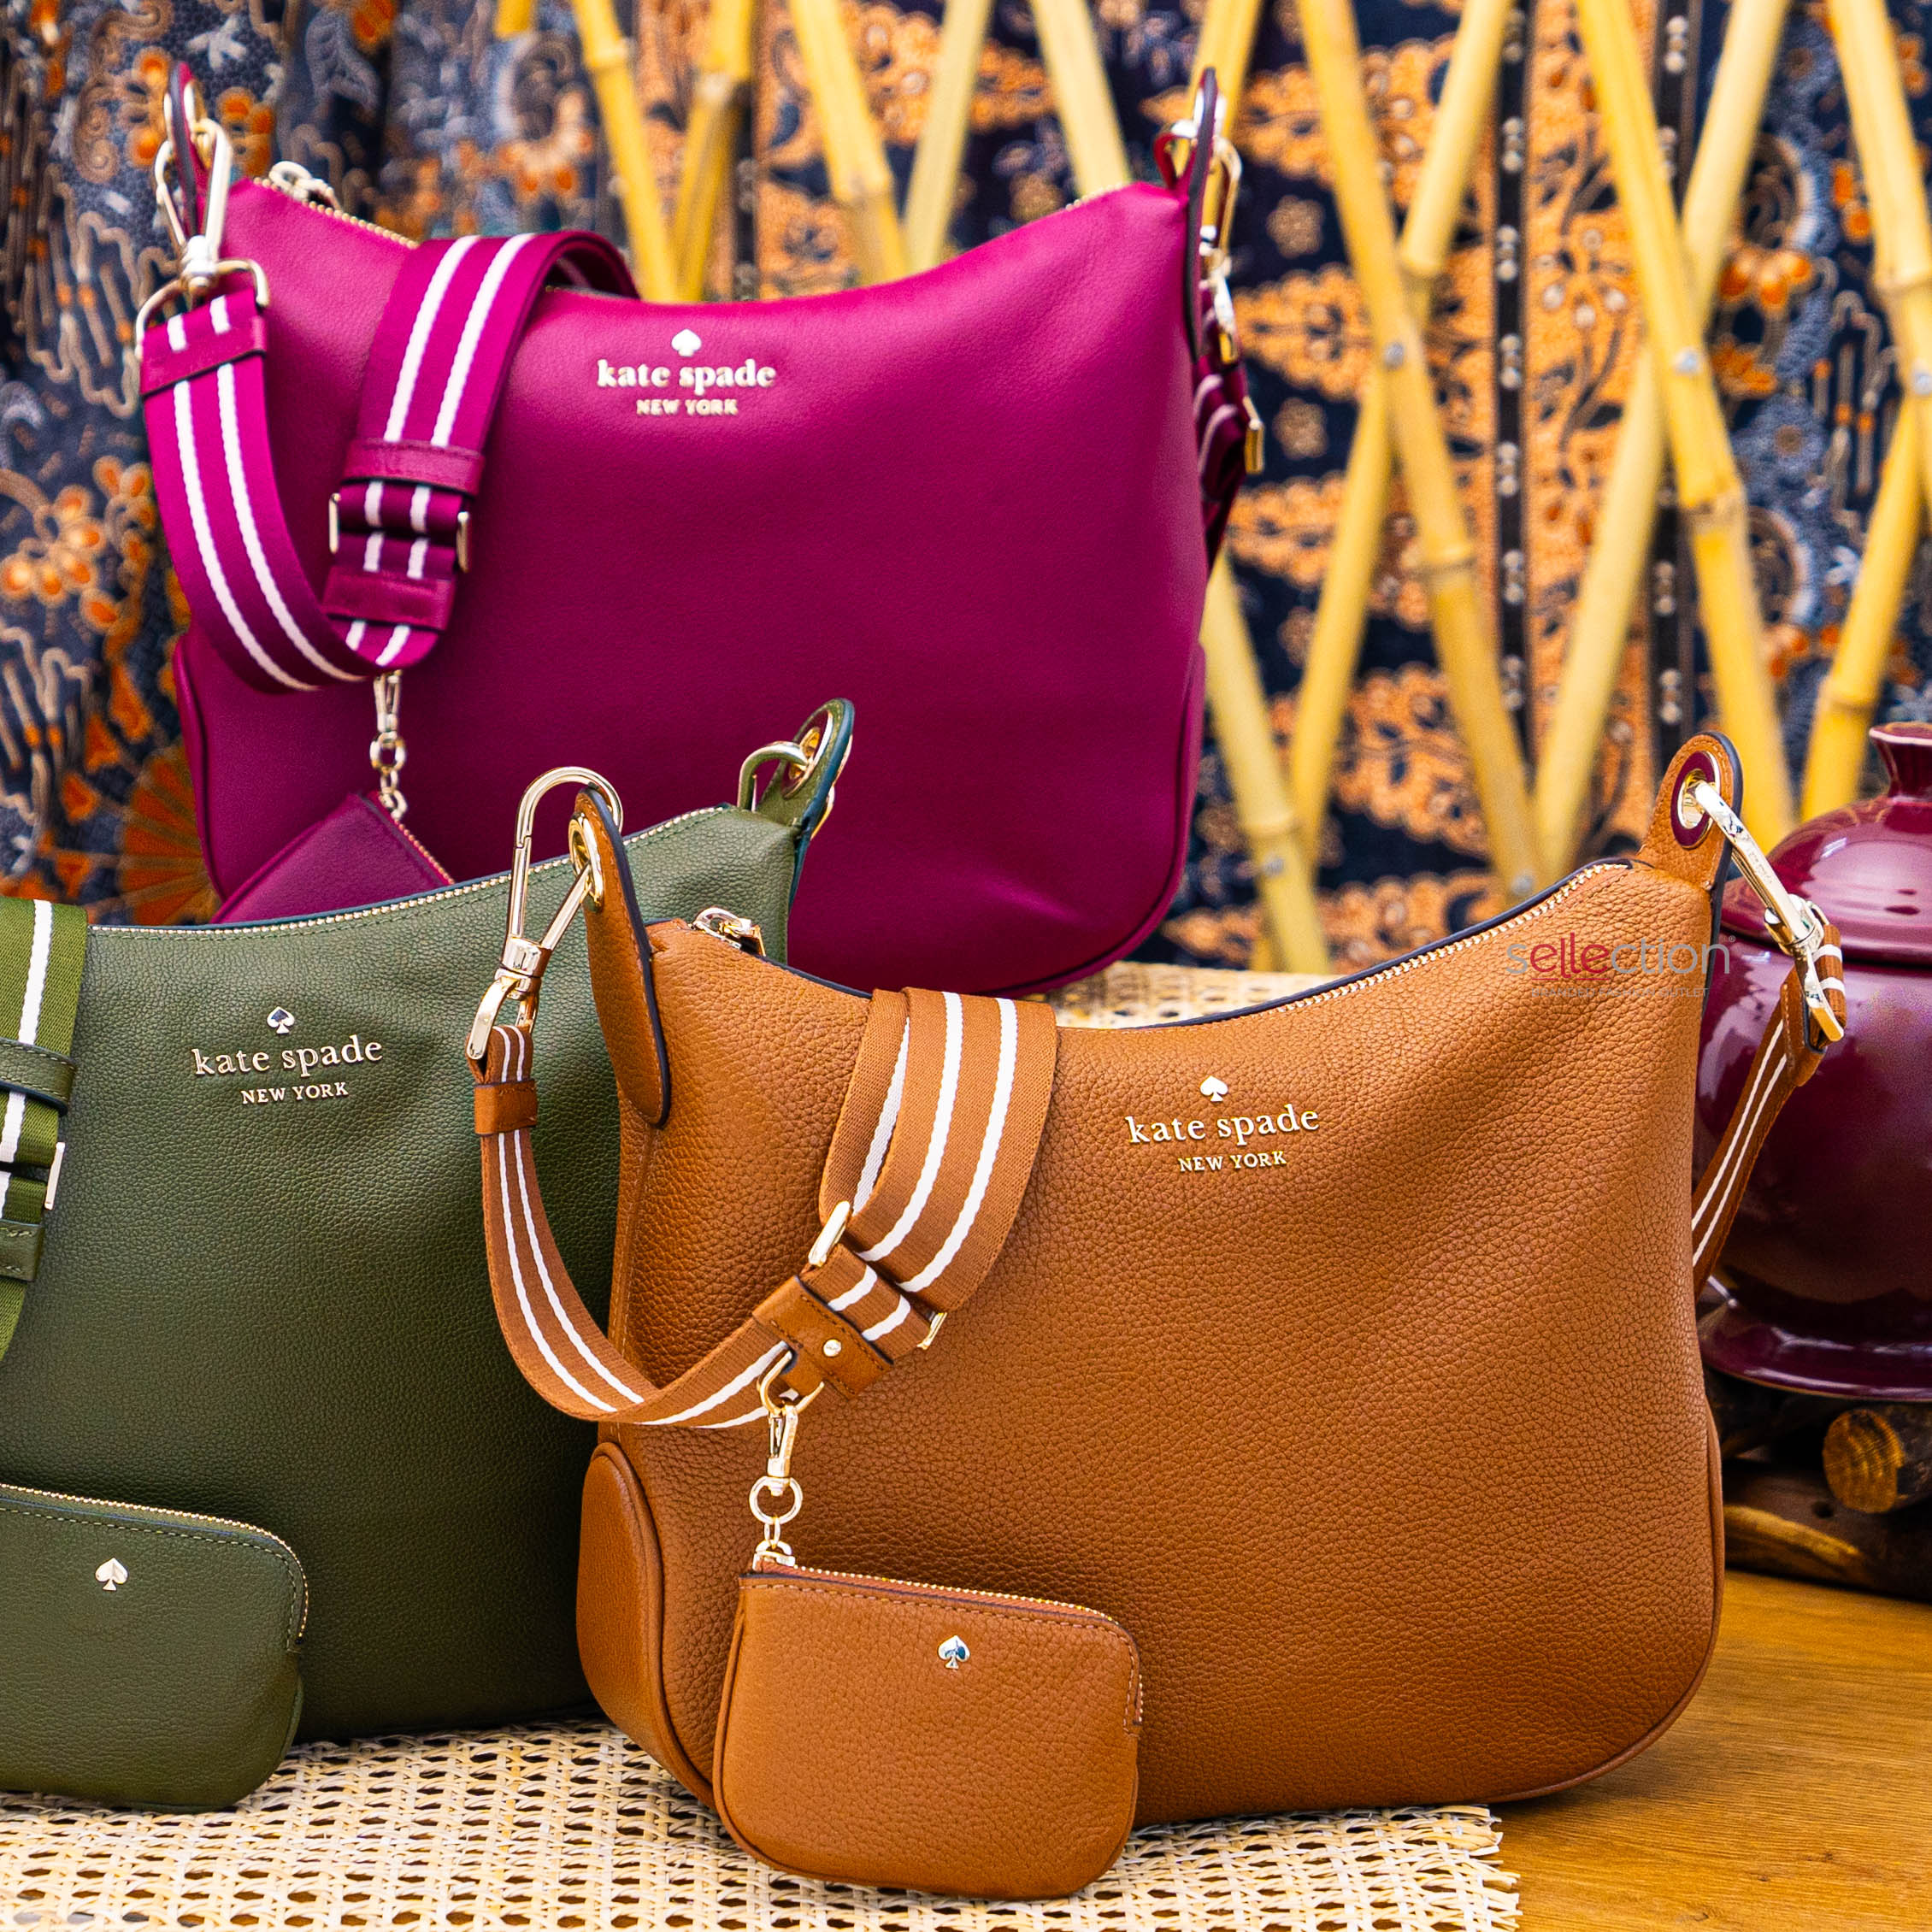 Buy VOYAGER PARIS Sephora Handbag with Stylish Handle for girls & Women  (Baby Pink) at Amazon.in